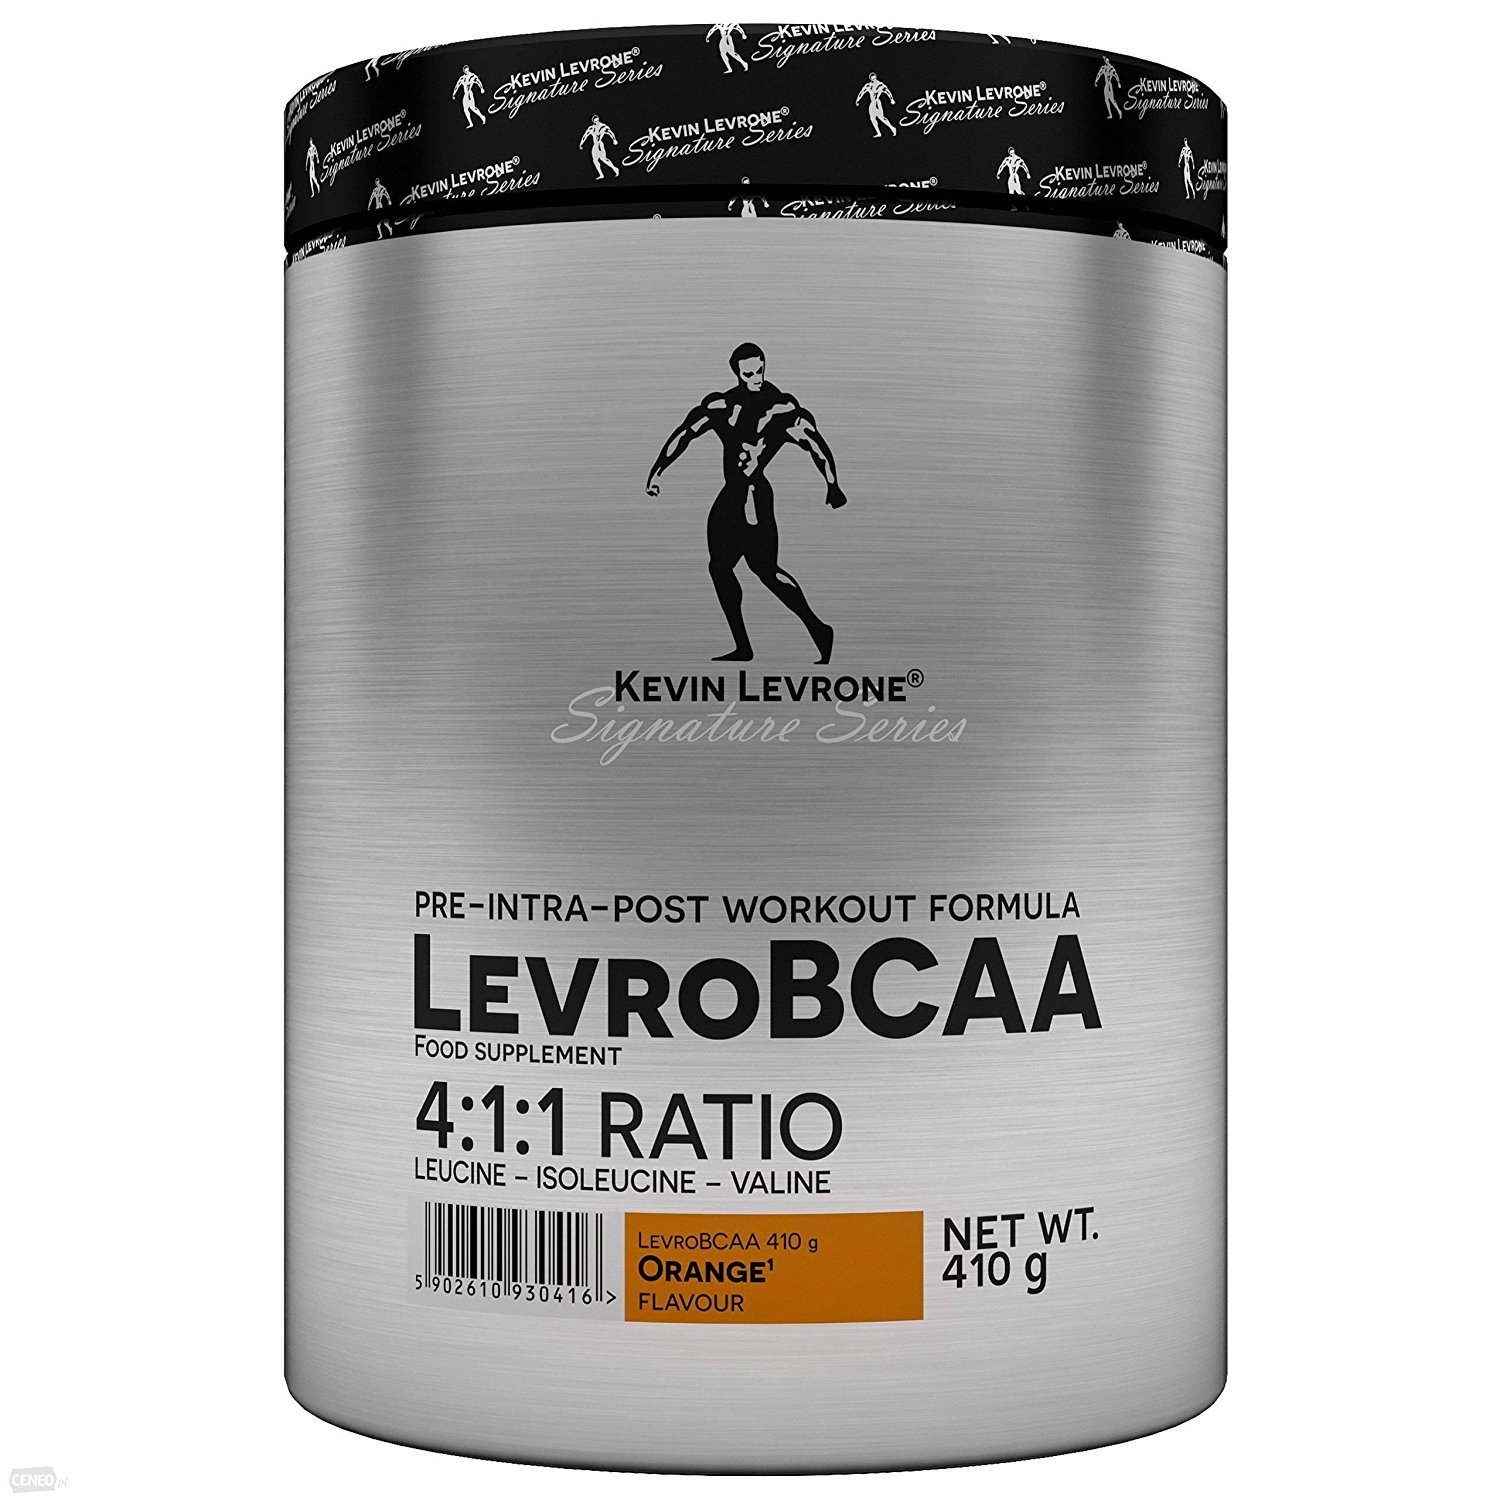 Kevin Levrone LevroBCAA Powder, , 410 g